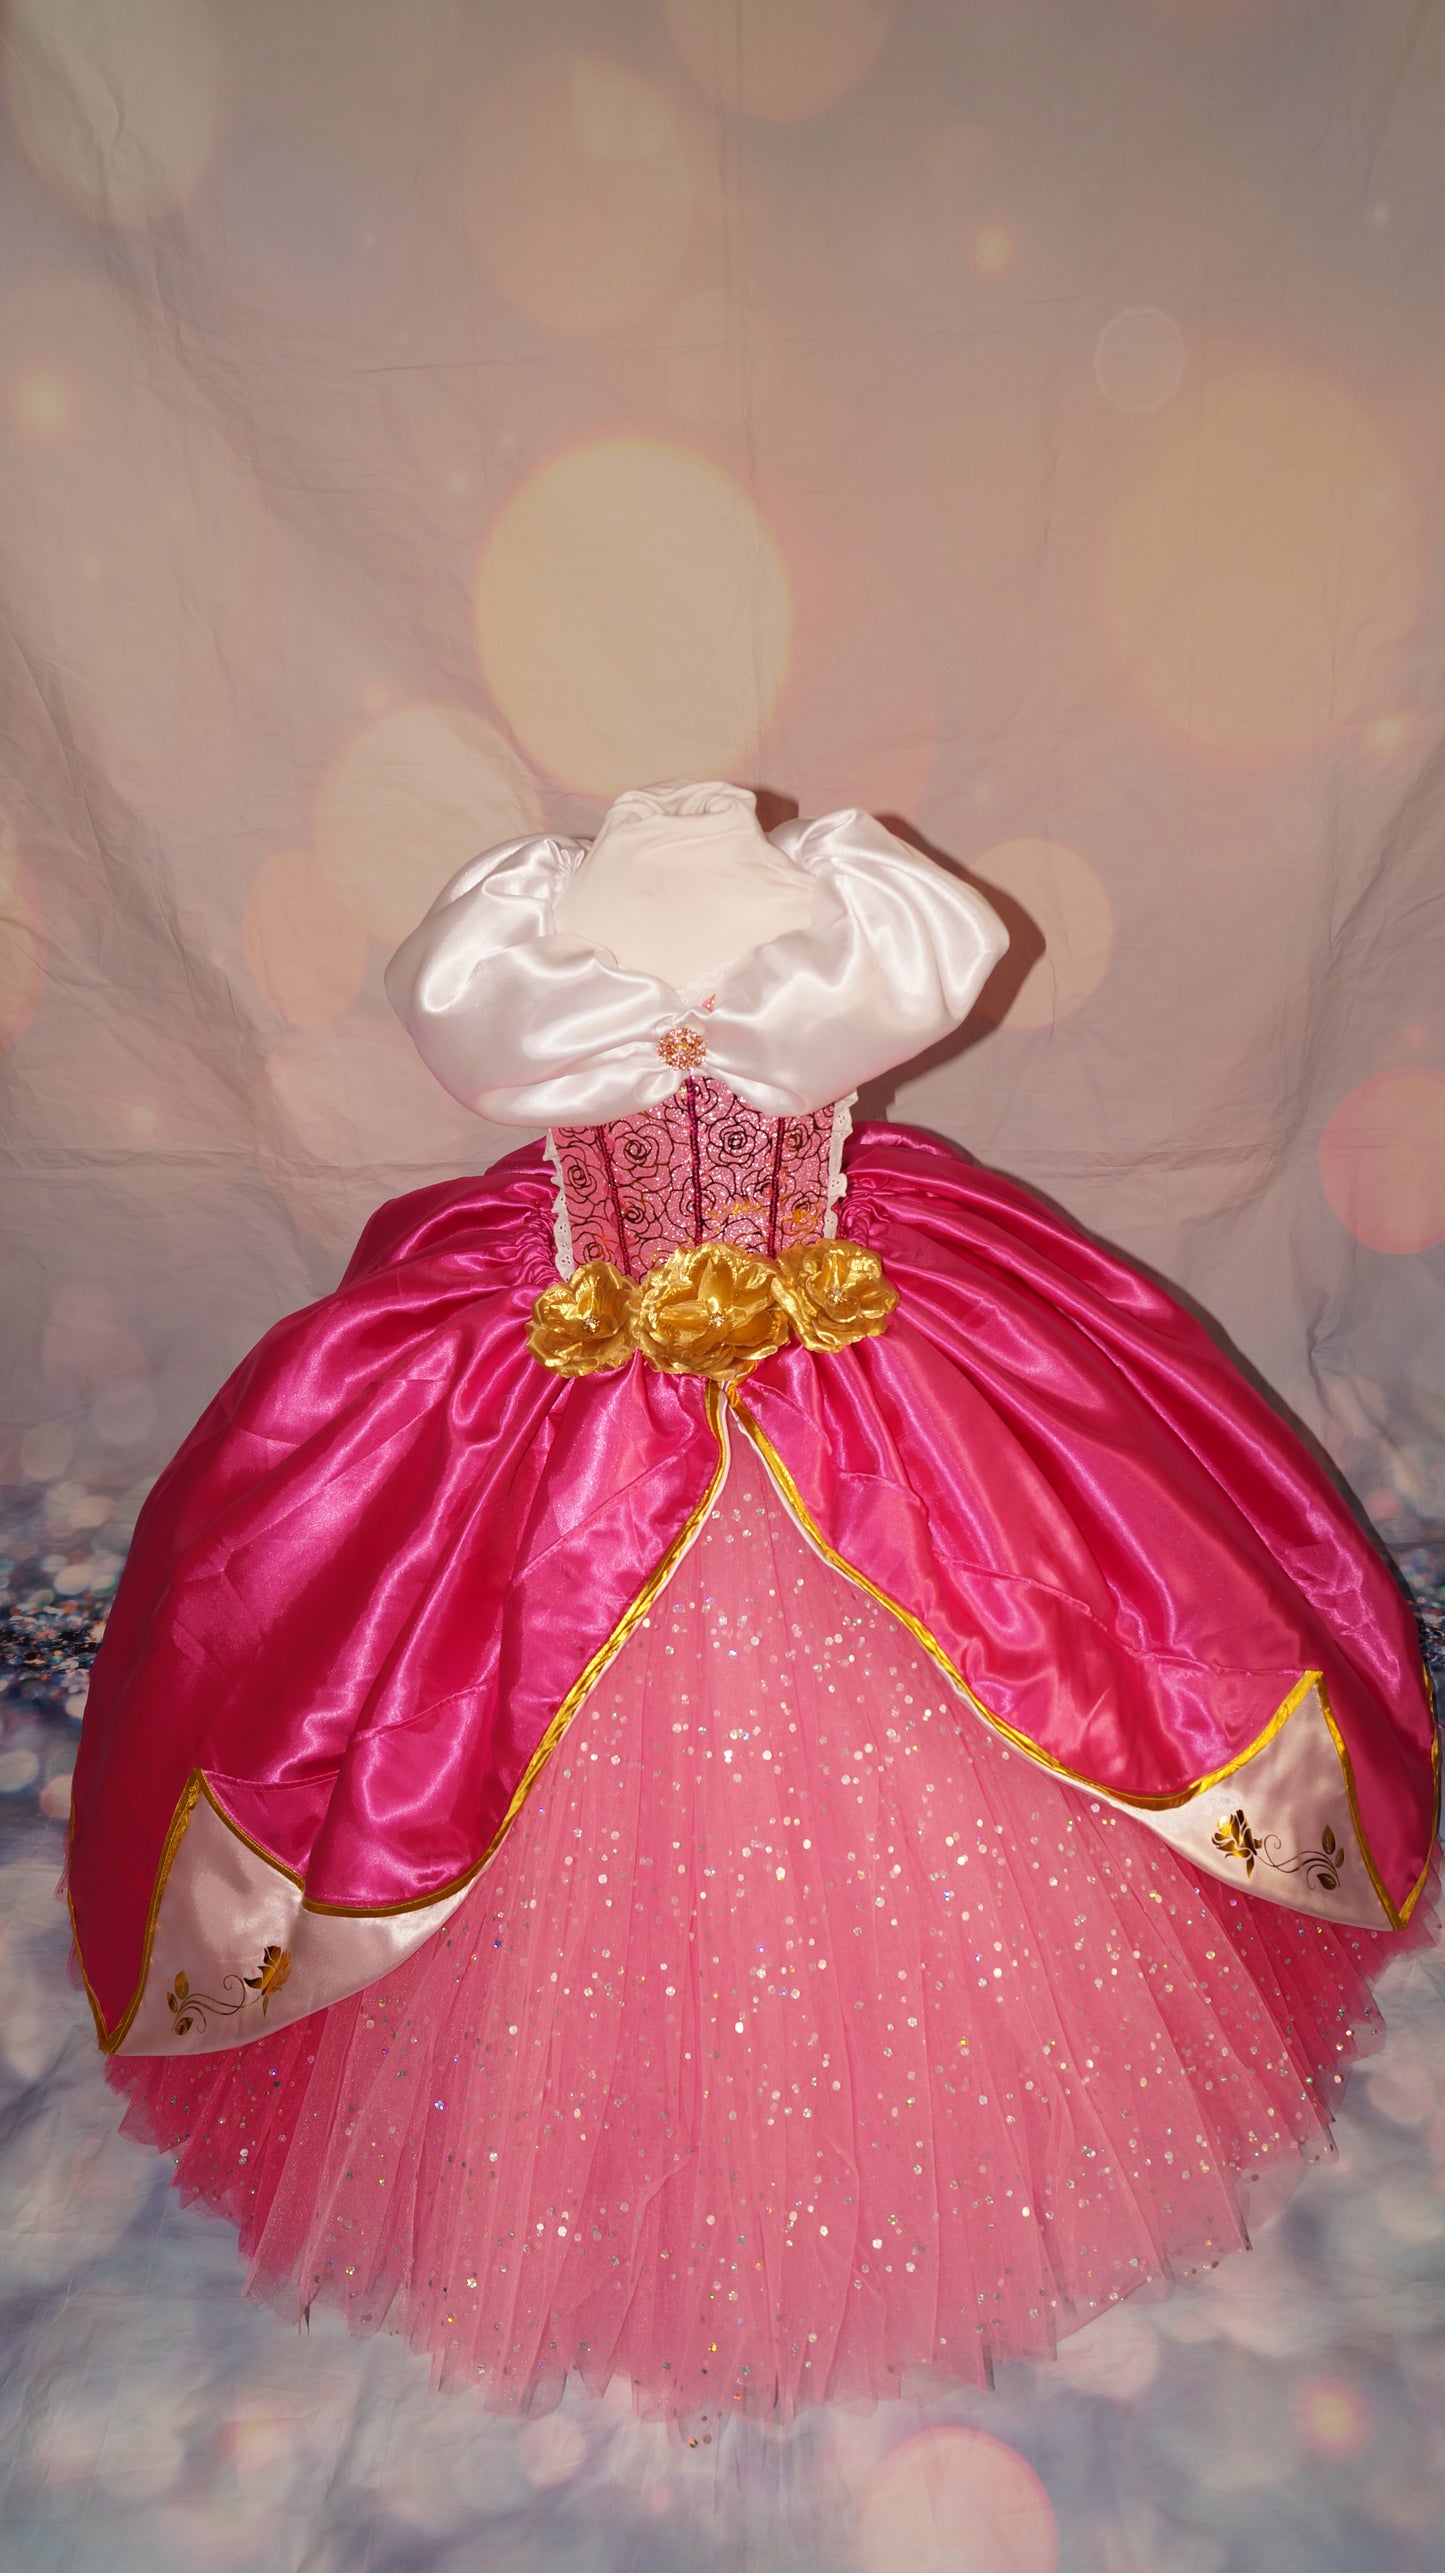 Girls Deluxe Aurora Sleeping Beauty Inspired Princess Dress